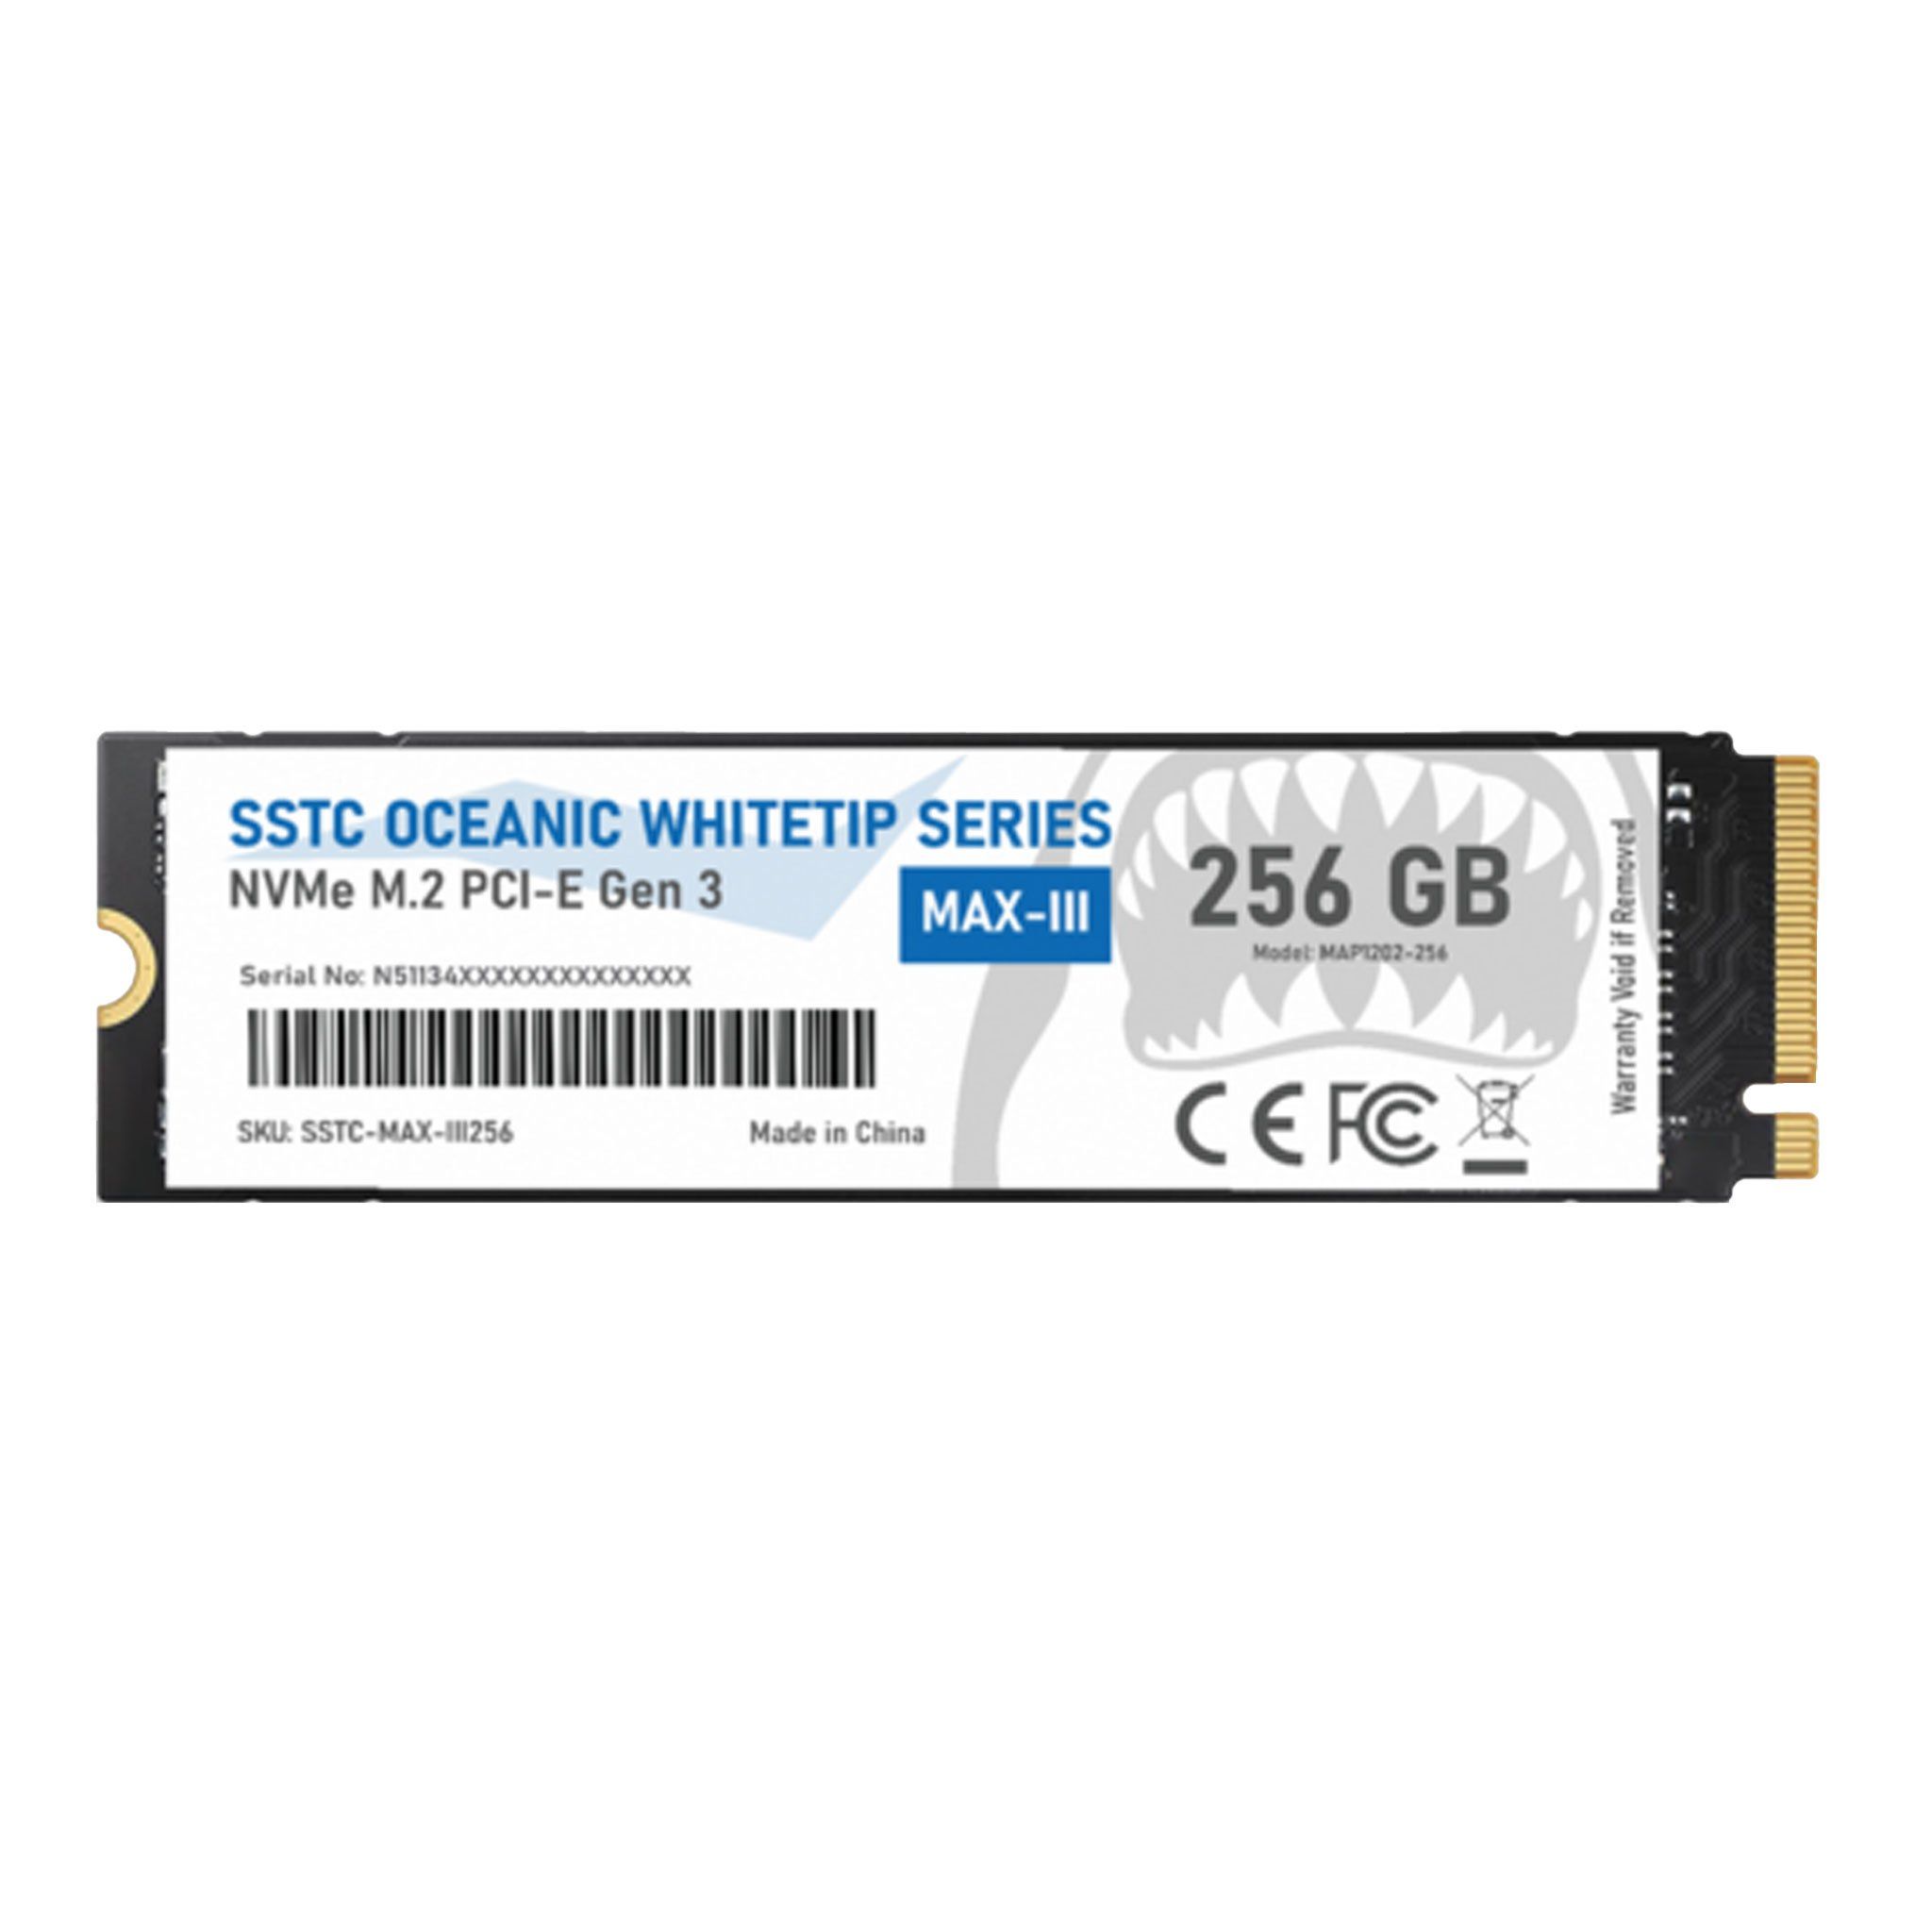 Ổ cứng SSD SSTC Oceanic Whitetip NVMe M.2 MAX-III 256GB (Gen 3) (OP-MAXIII-256T)